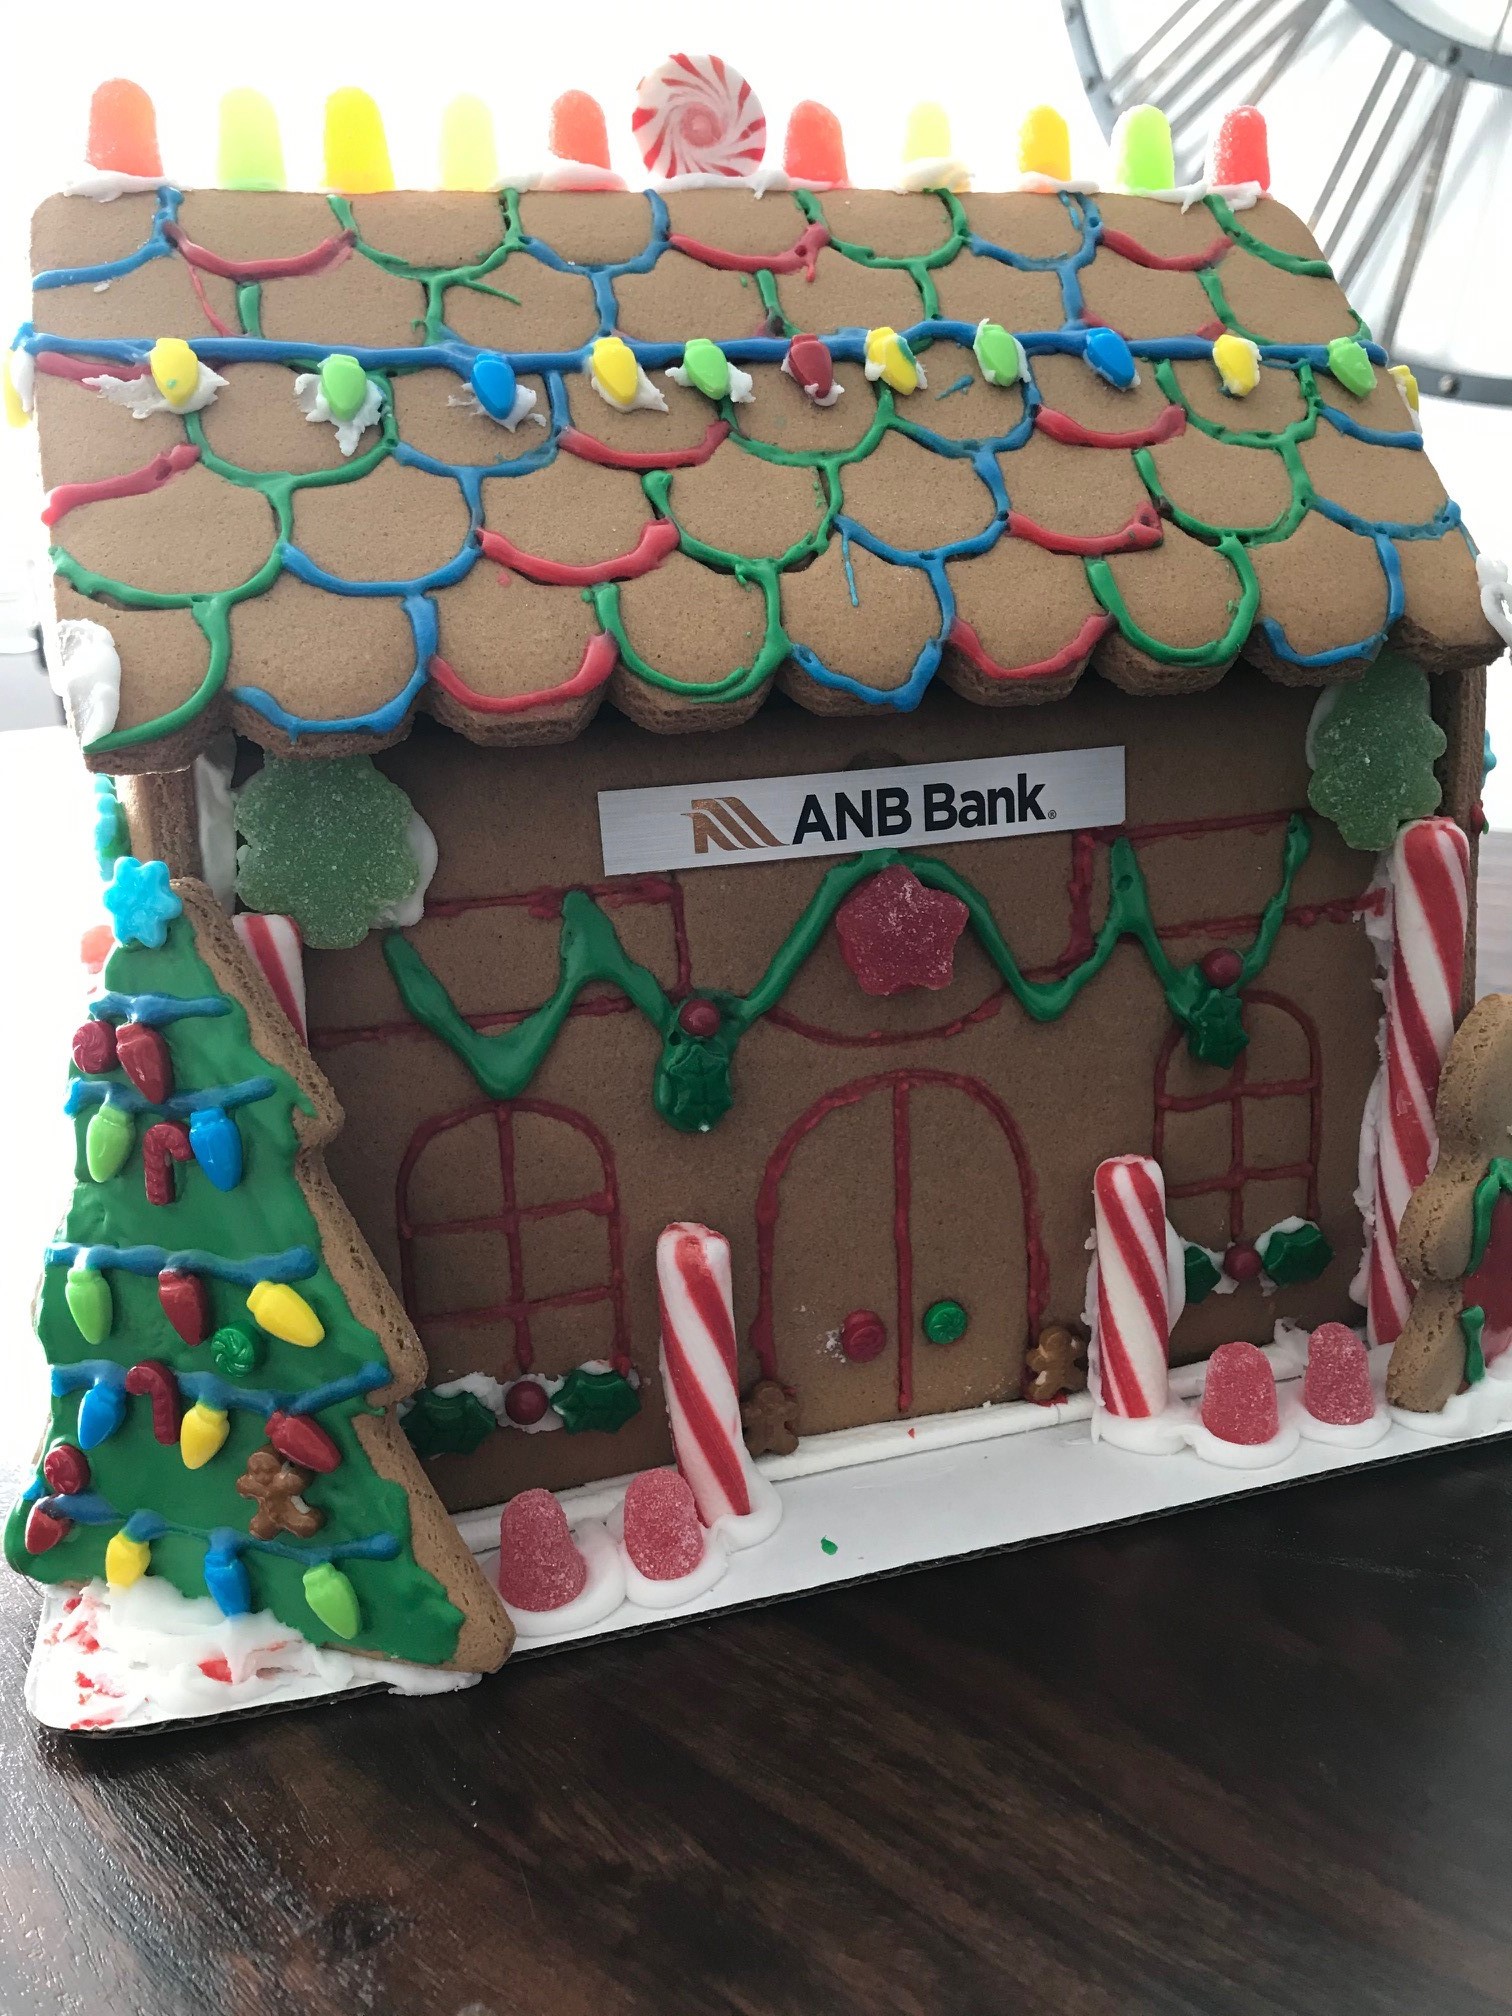 ANB Bank's Home